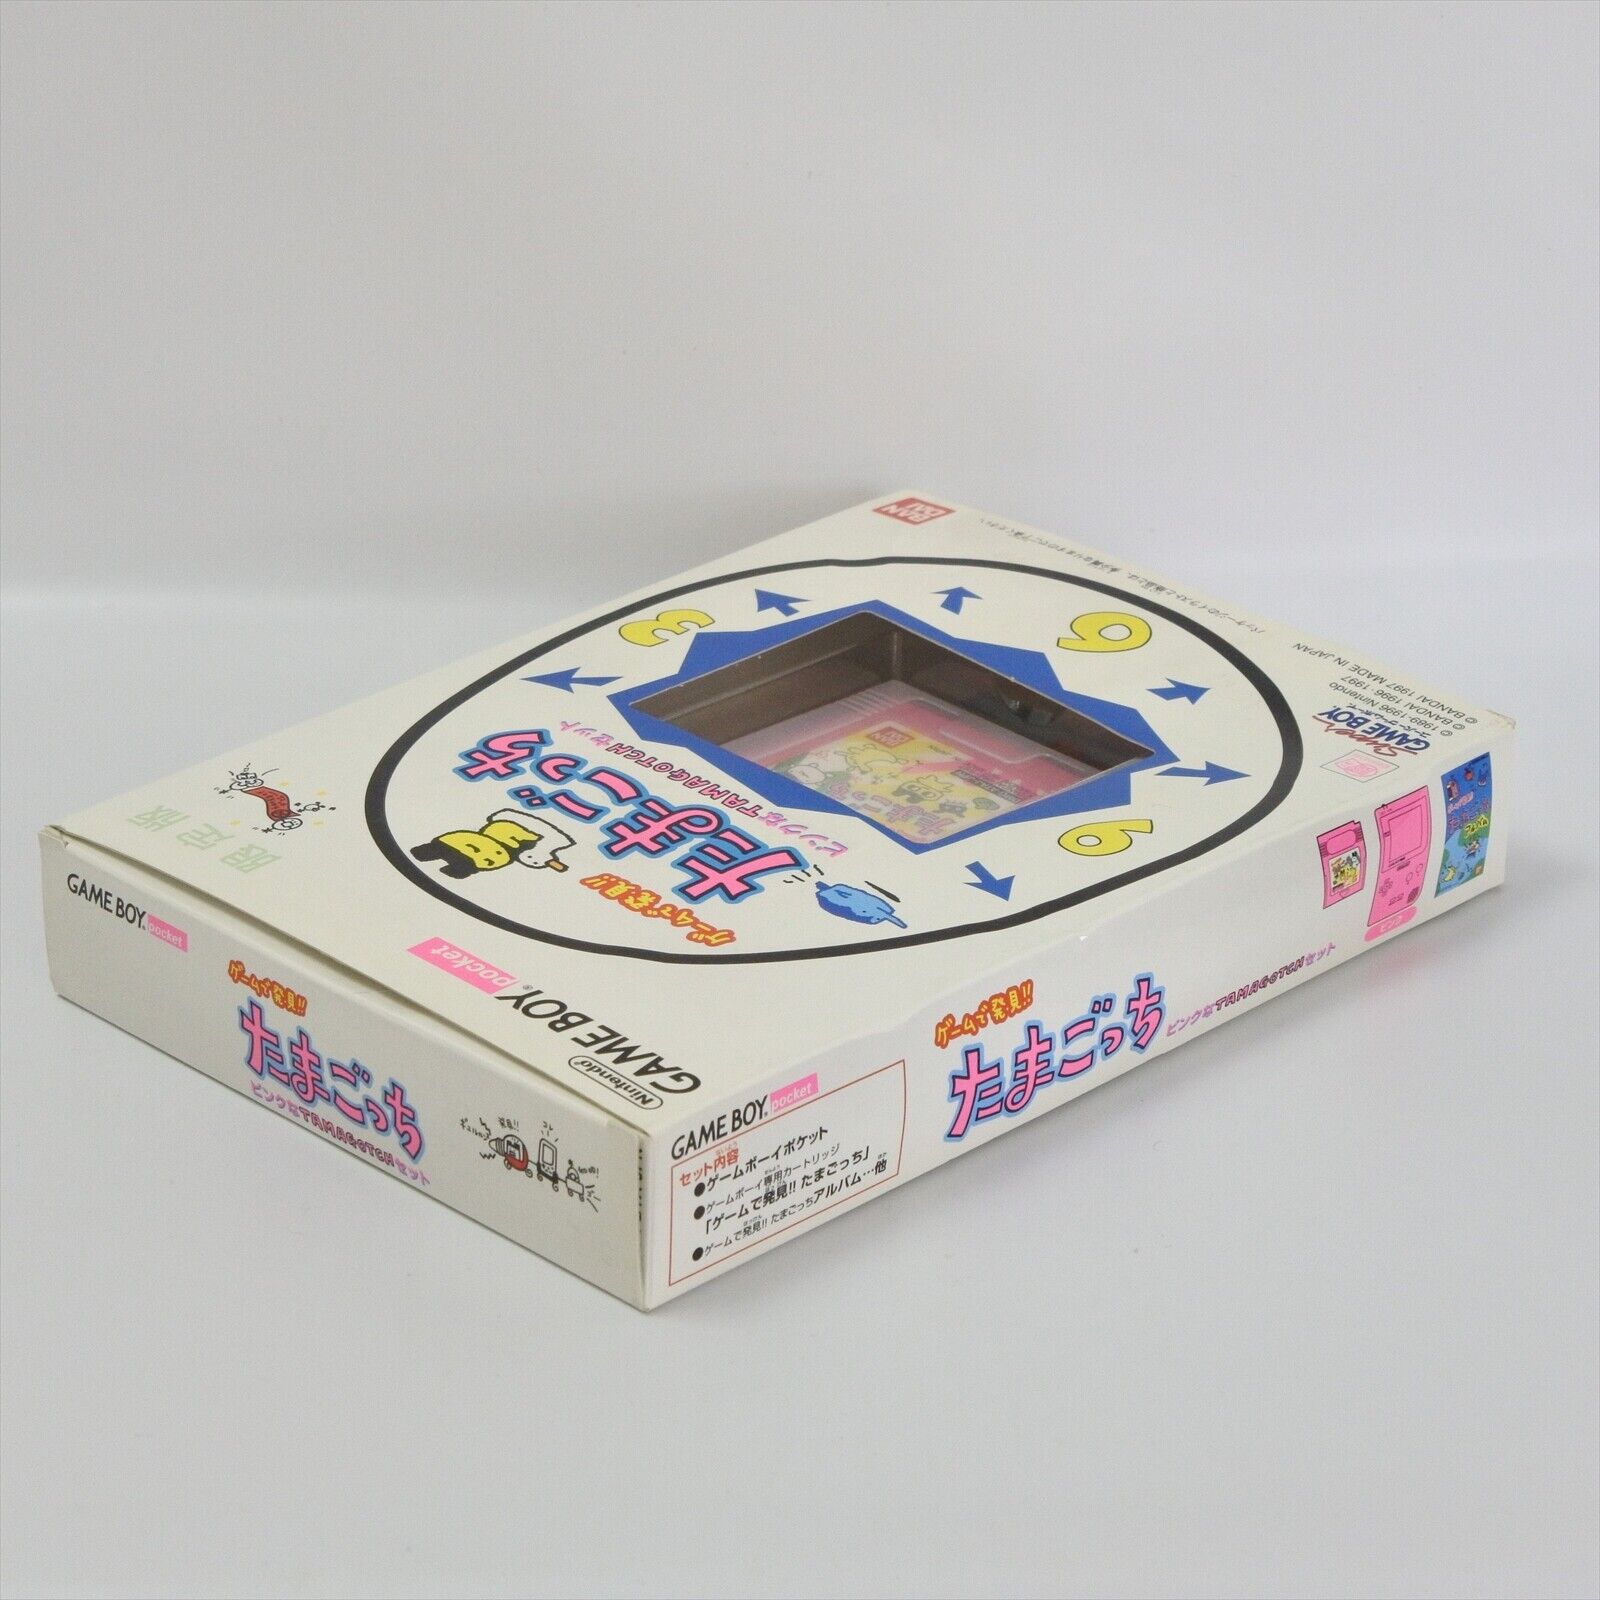 Gameboy Pocket Pink Console TAMAGOTCH Set Limited Boxed 11830015 Nintendo gb